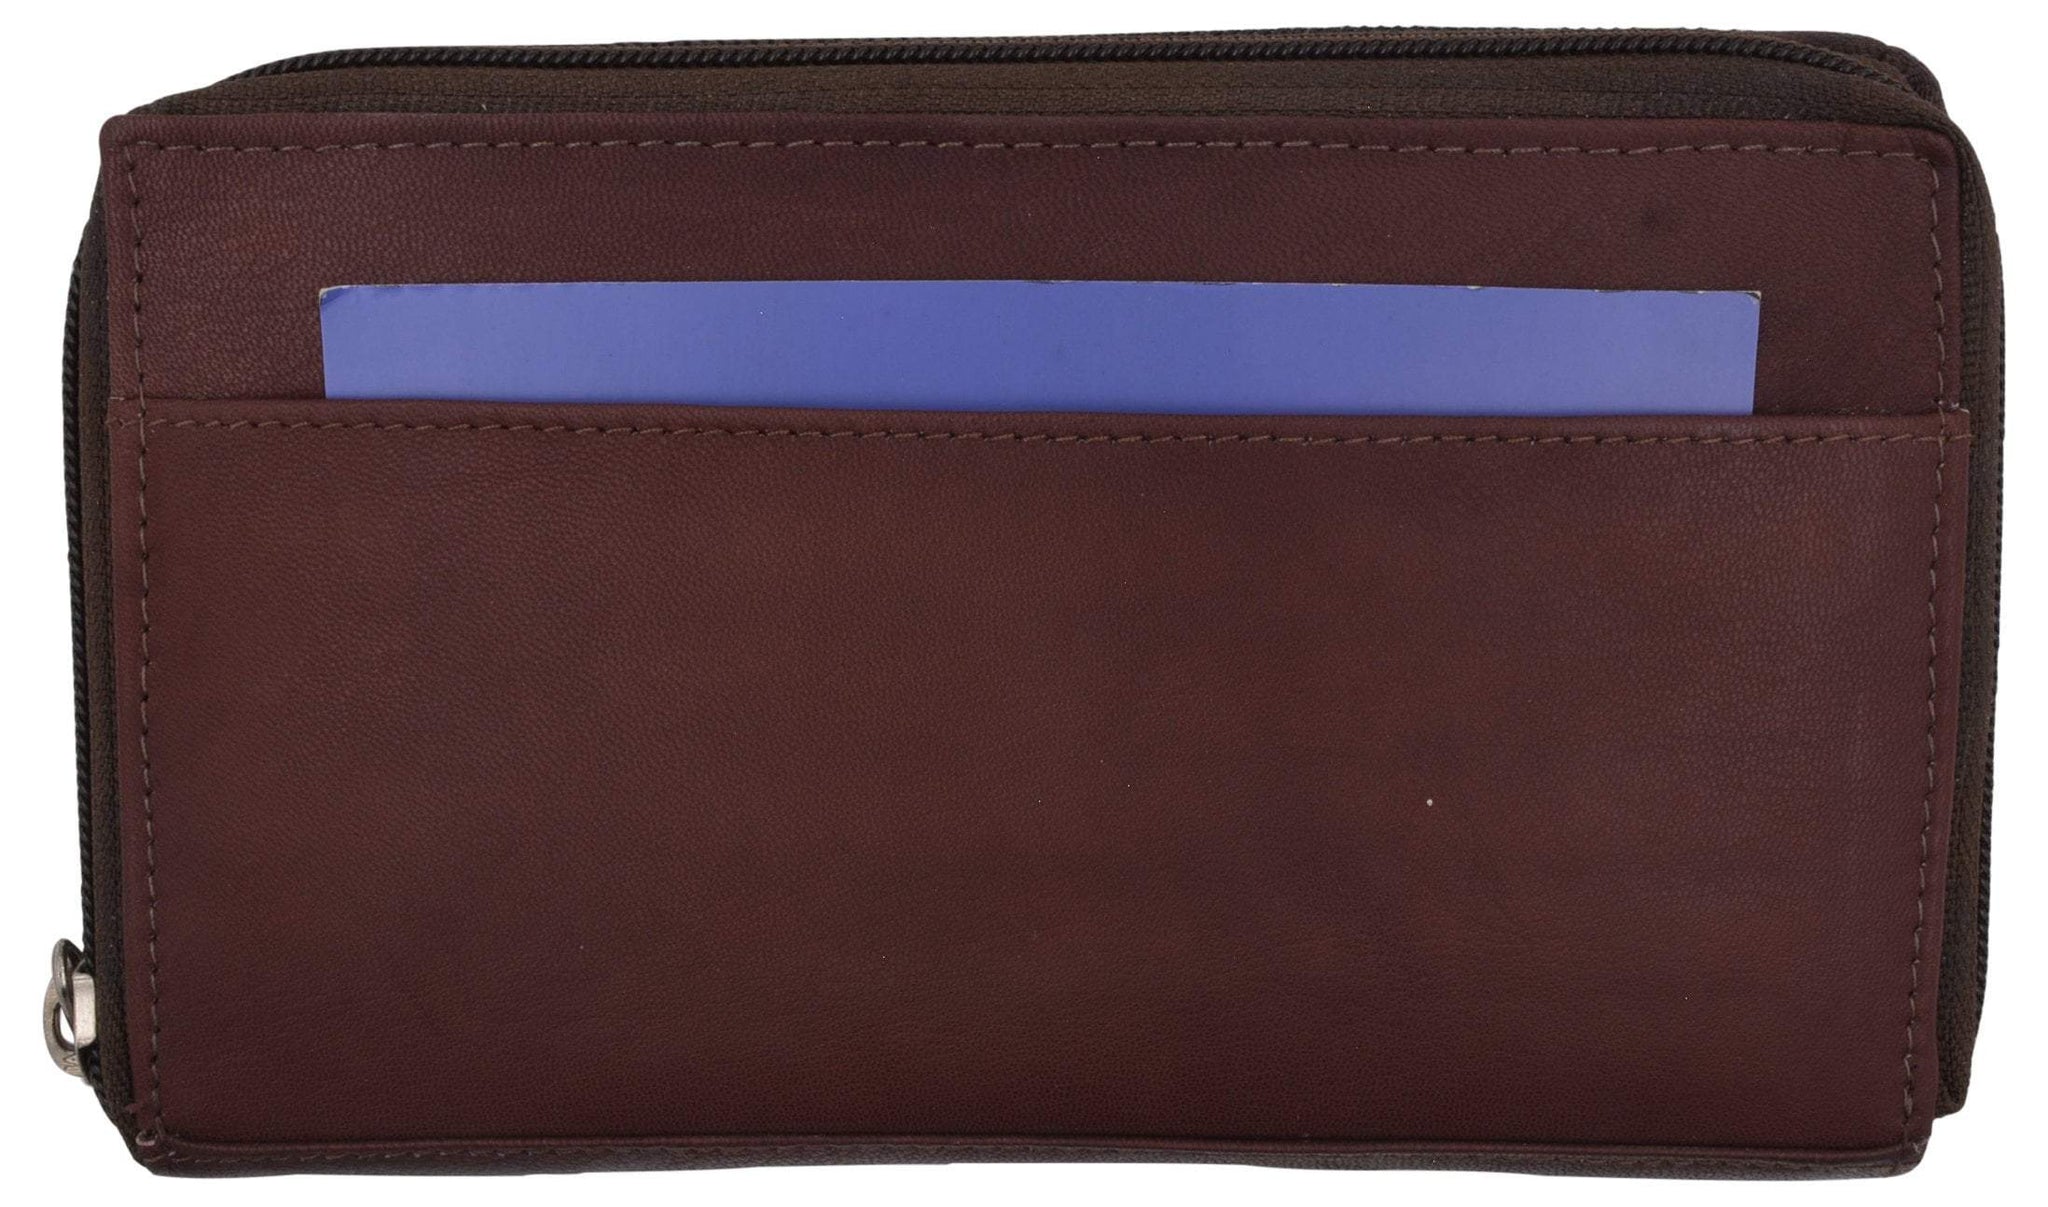 Marshal Zip Around Genuine Leather Ladies Wallet